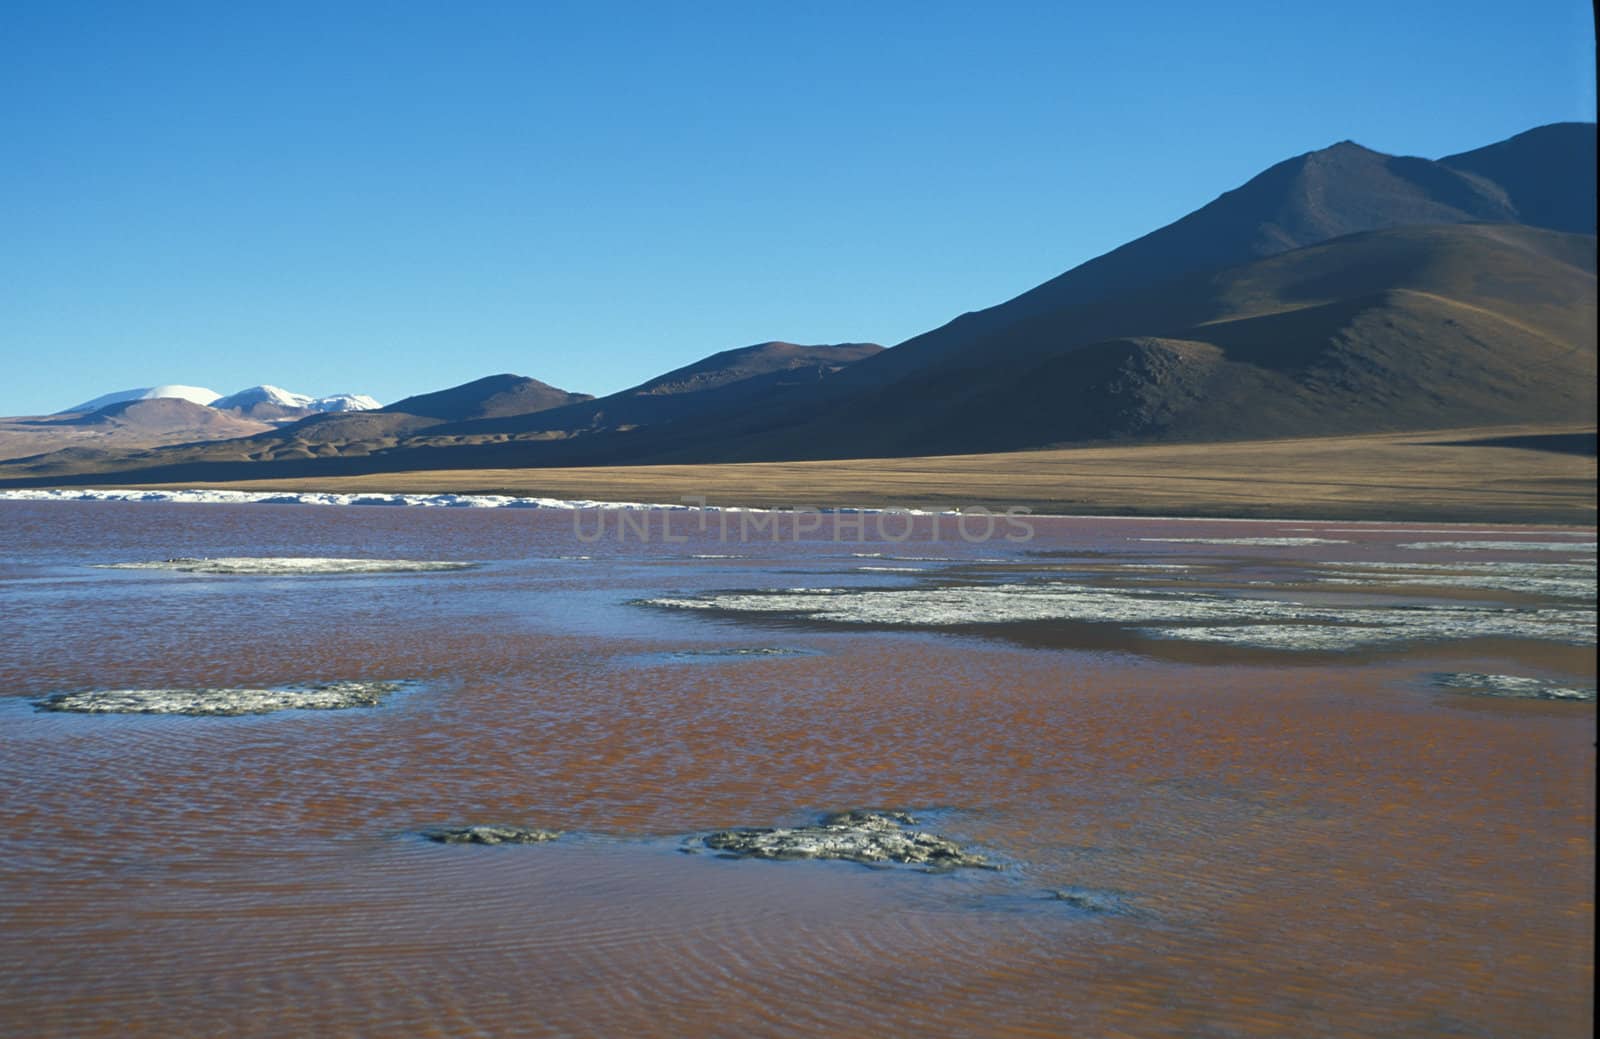 Red algae covering a lake in the Bolivian Altiplano. Bolivia, South America